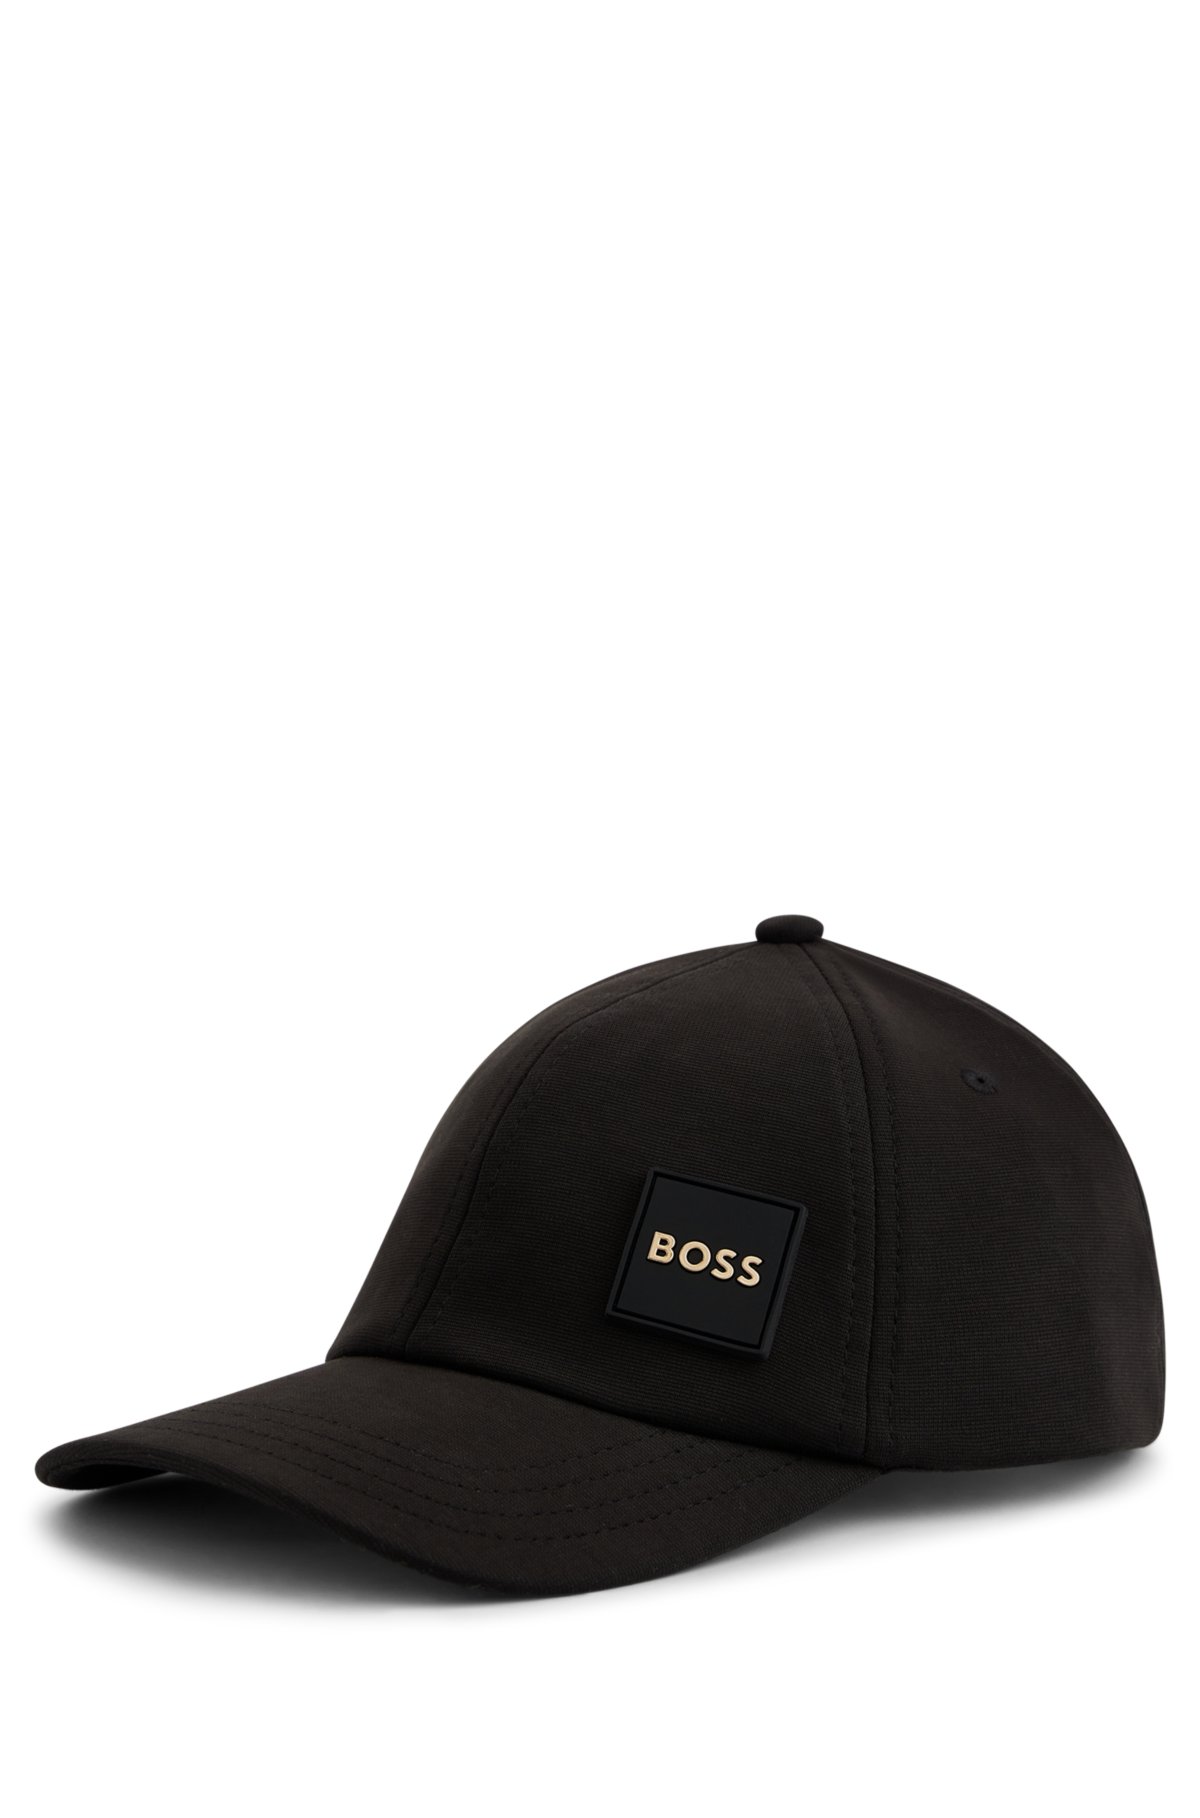 HUGO BOSS cap collection I distinct hats and caps